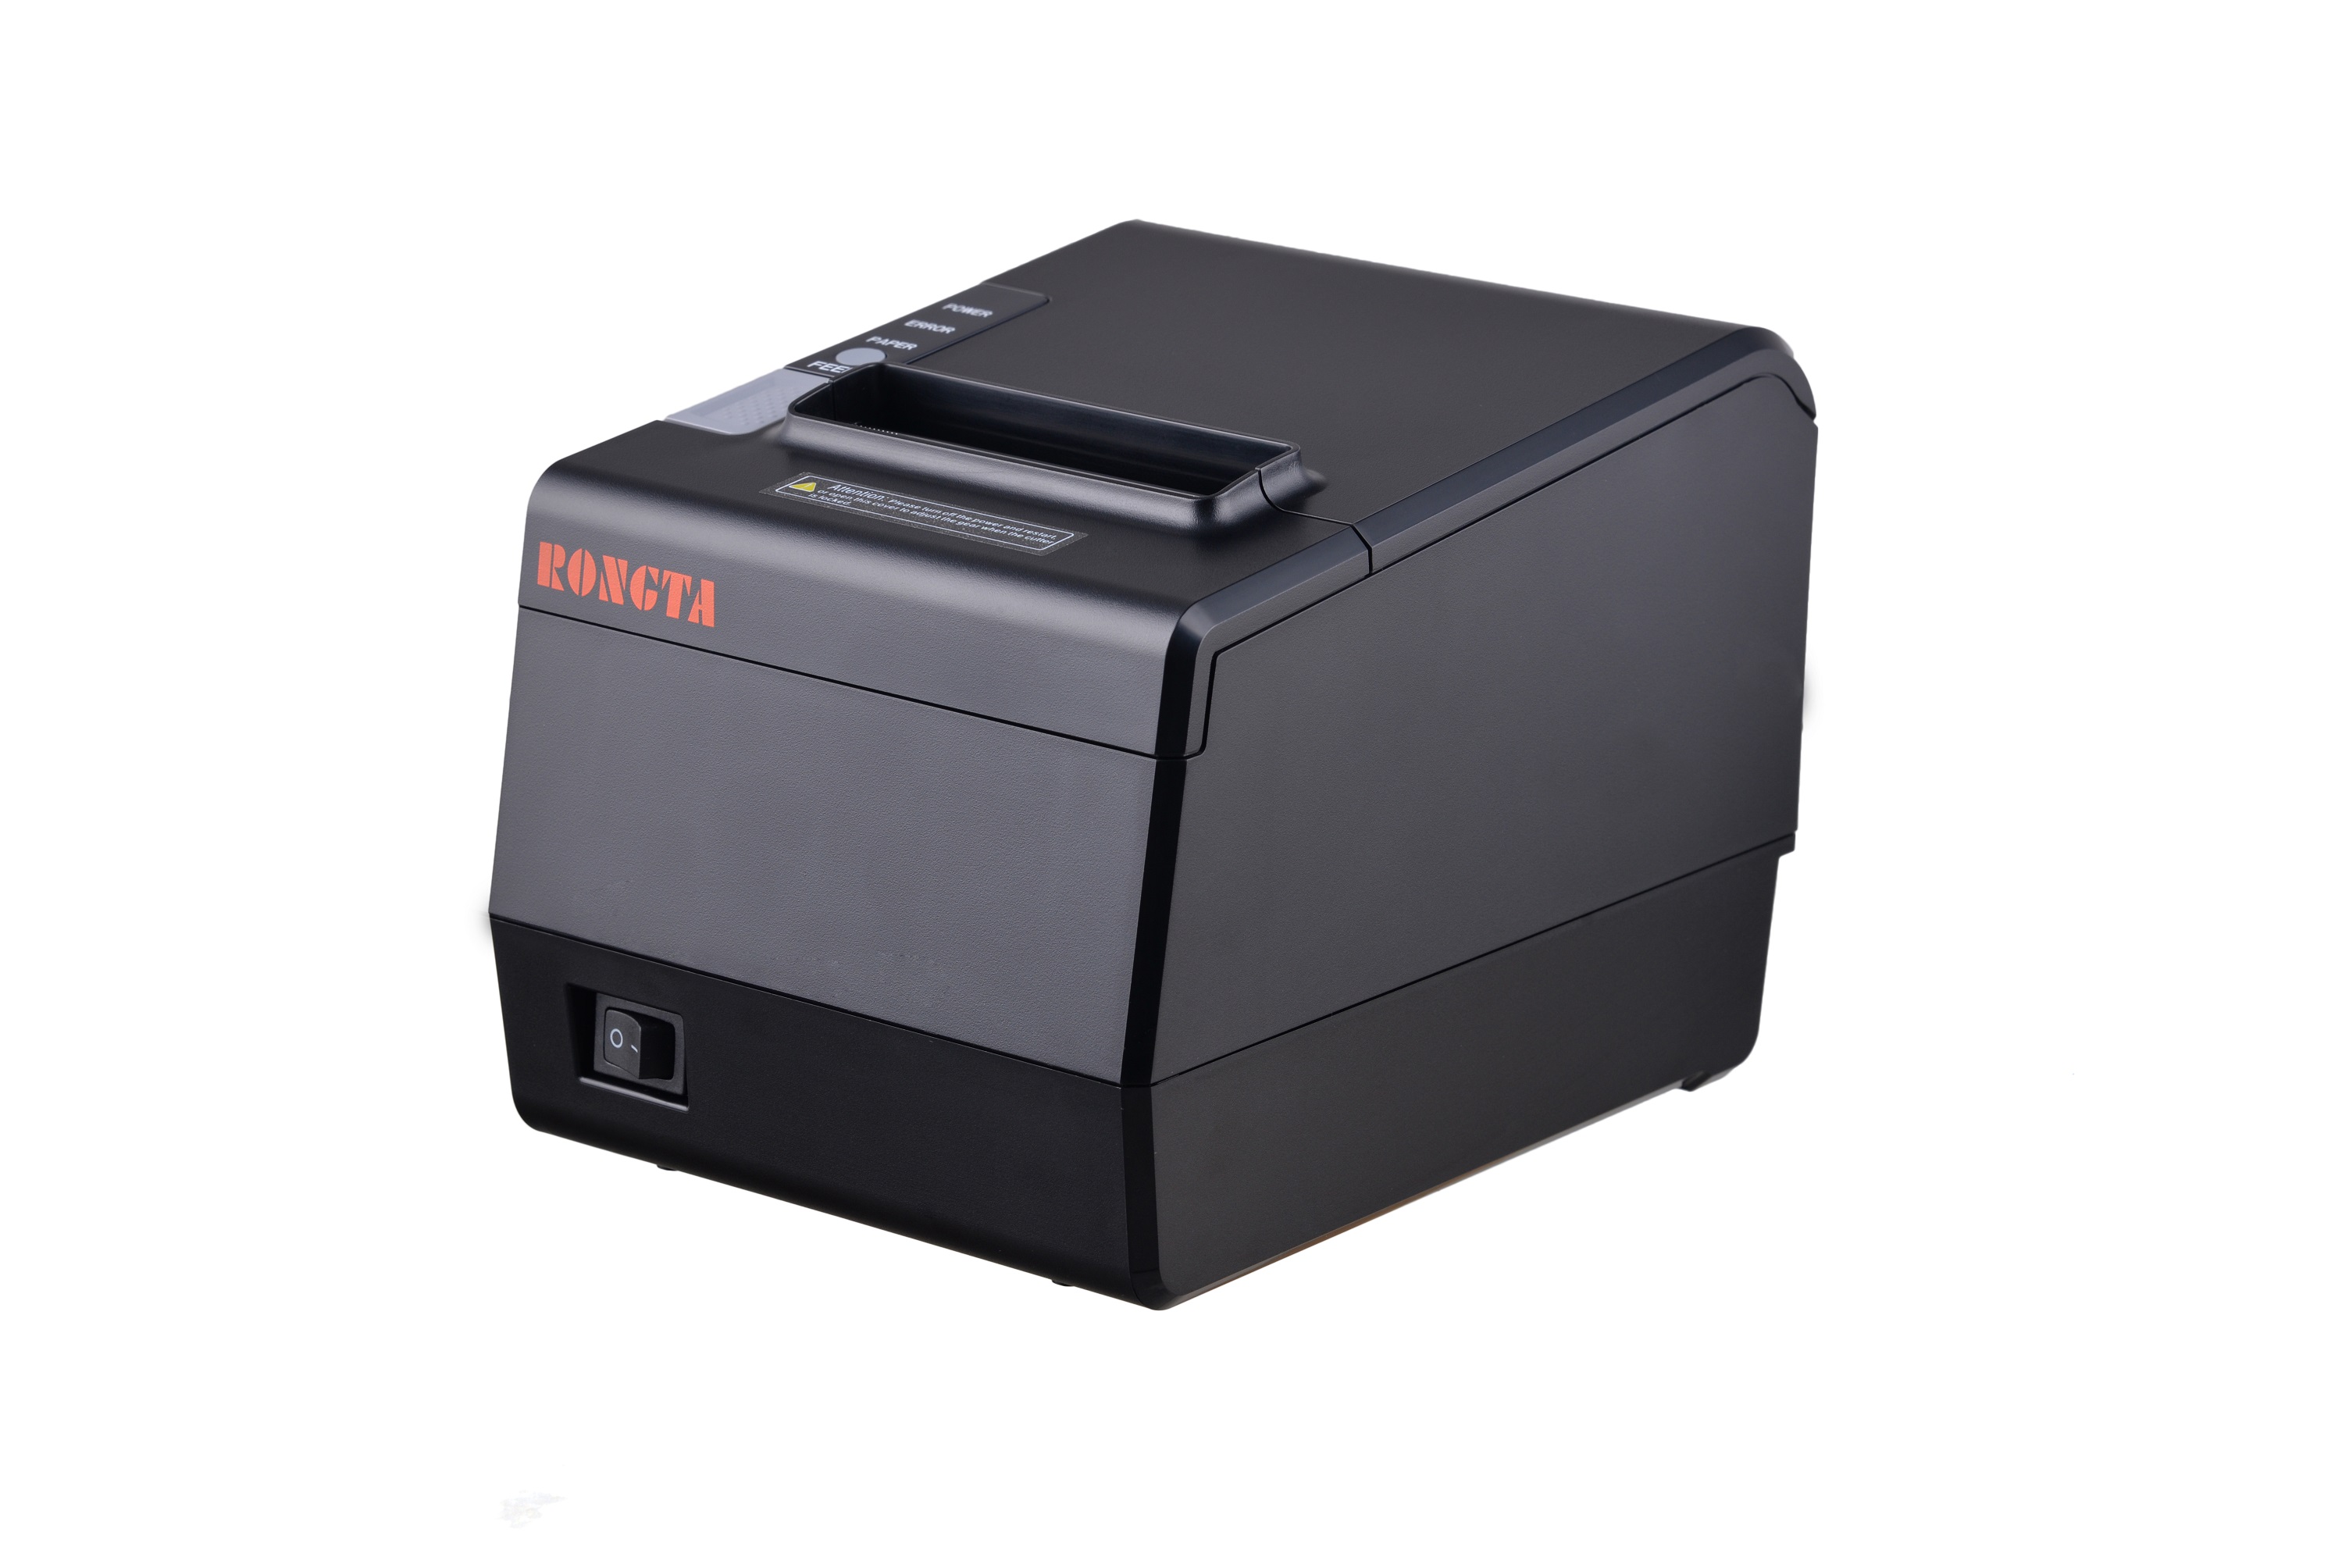 CWS RP850 POS Receipt Printer